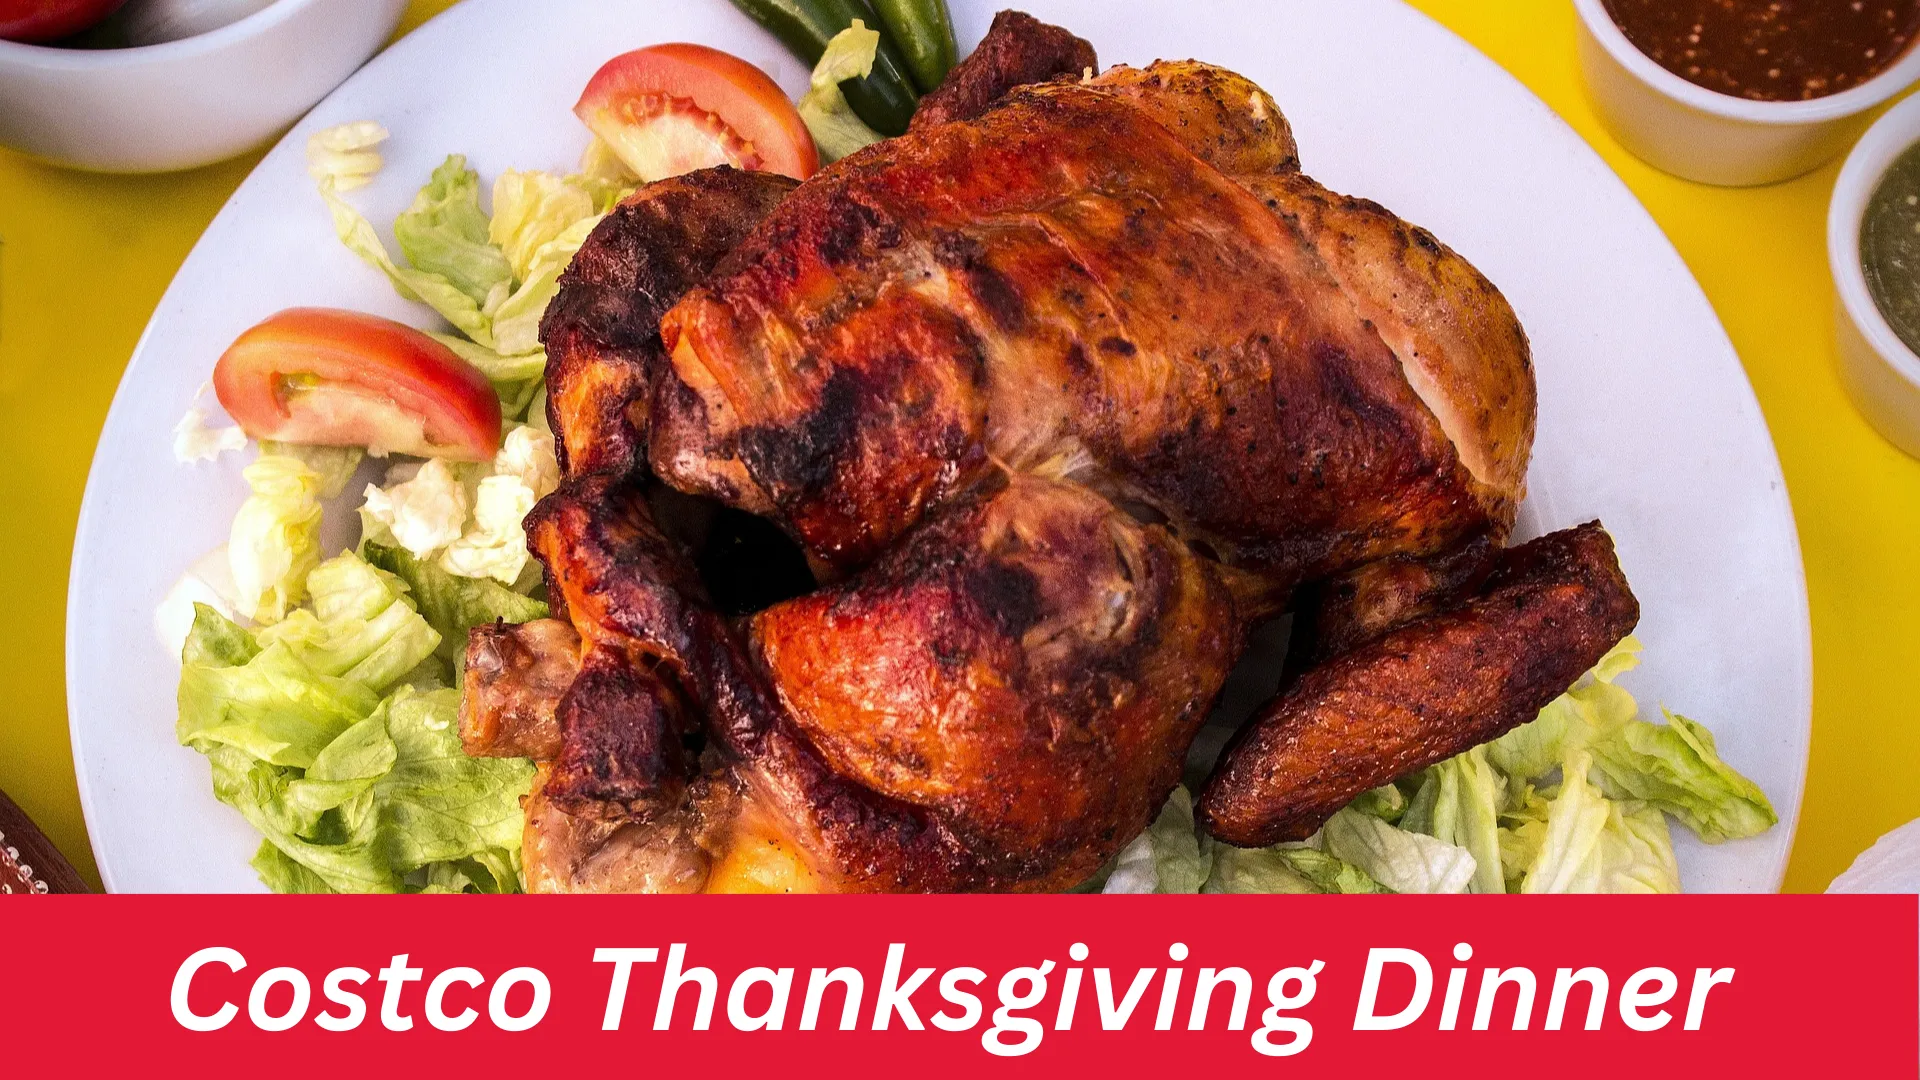 Costco Thanksgiving Dinner